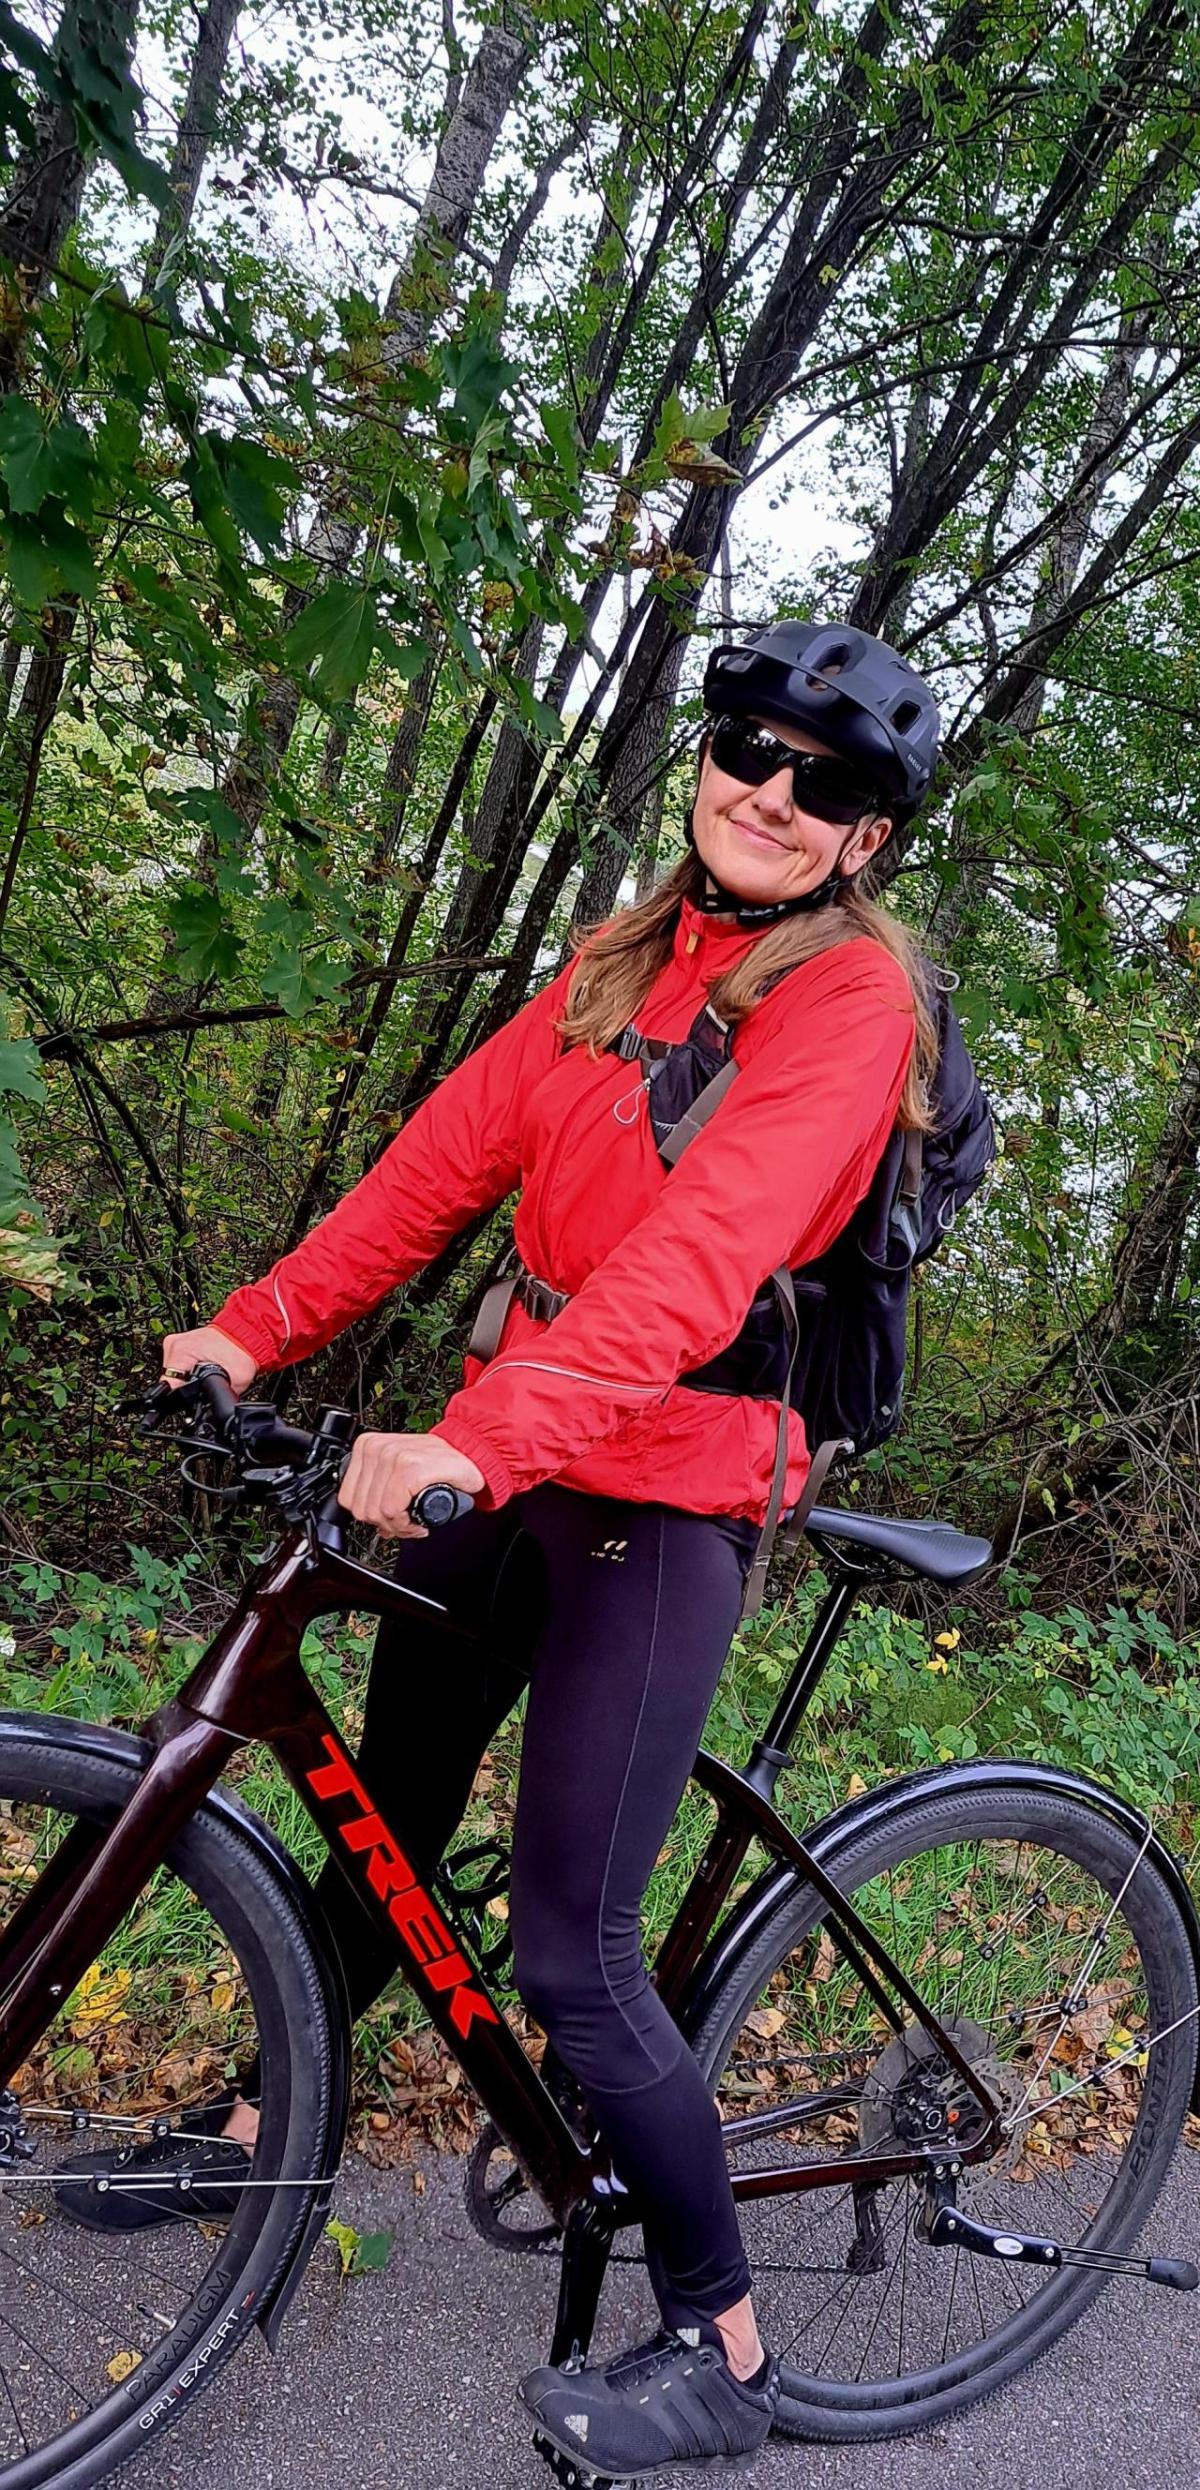 Sari Hokkanen on a bicycle